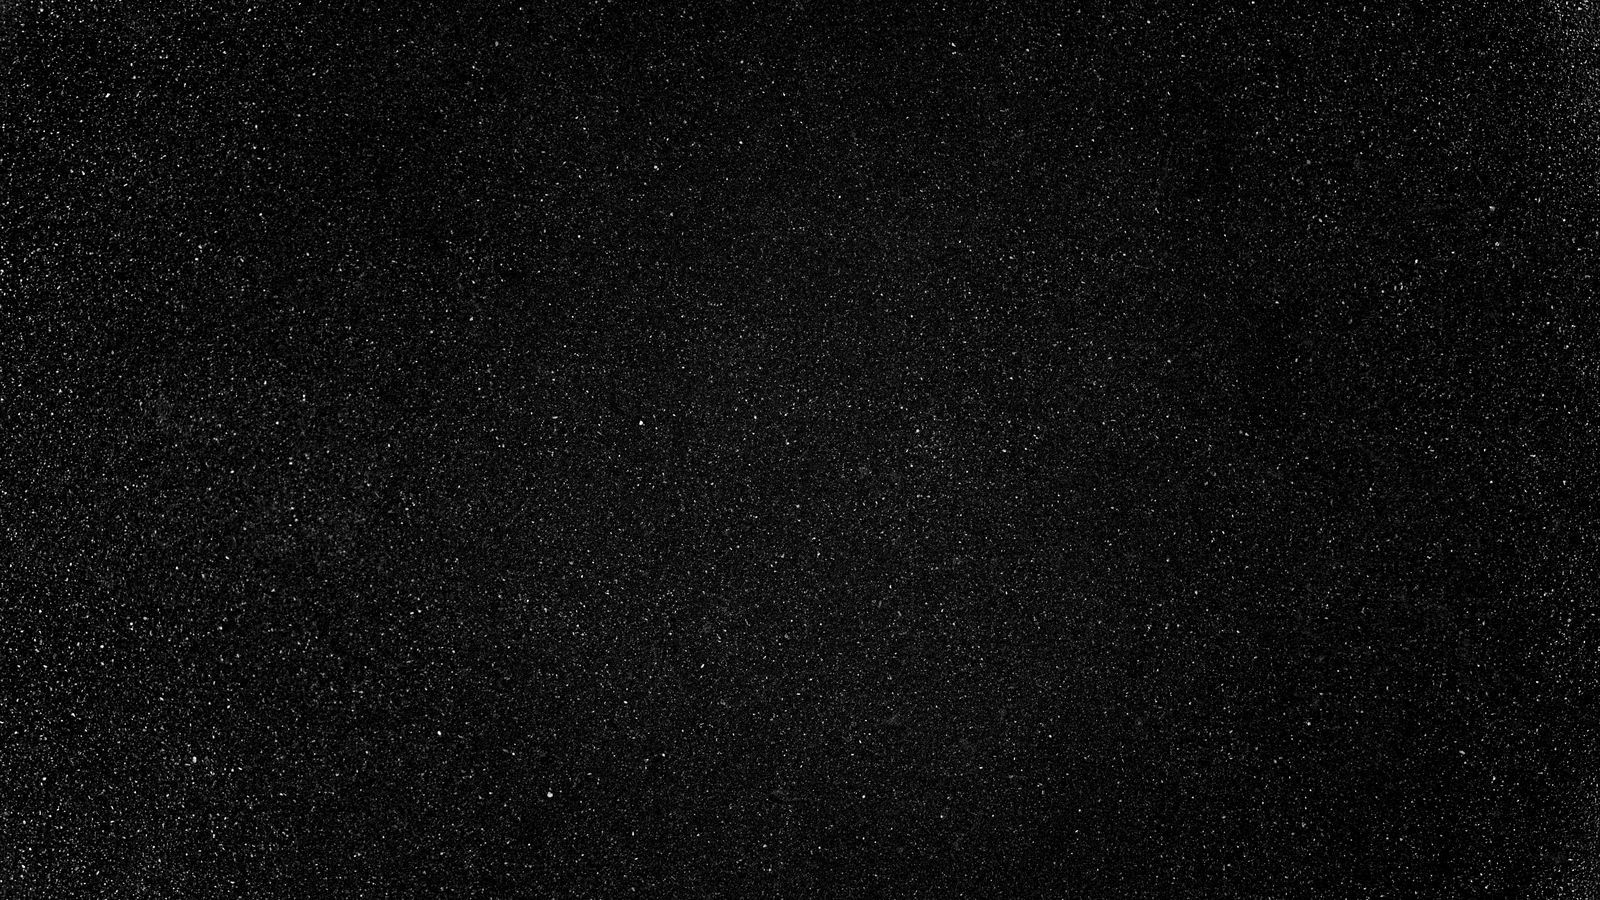 Download wallpaper 1600x900 stars, night, black, starry sky widescreen 16:9 HD background